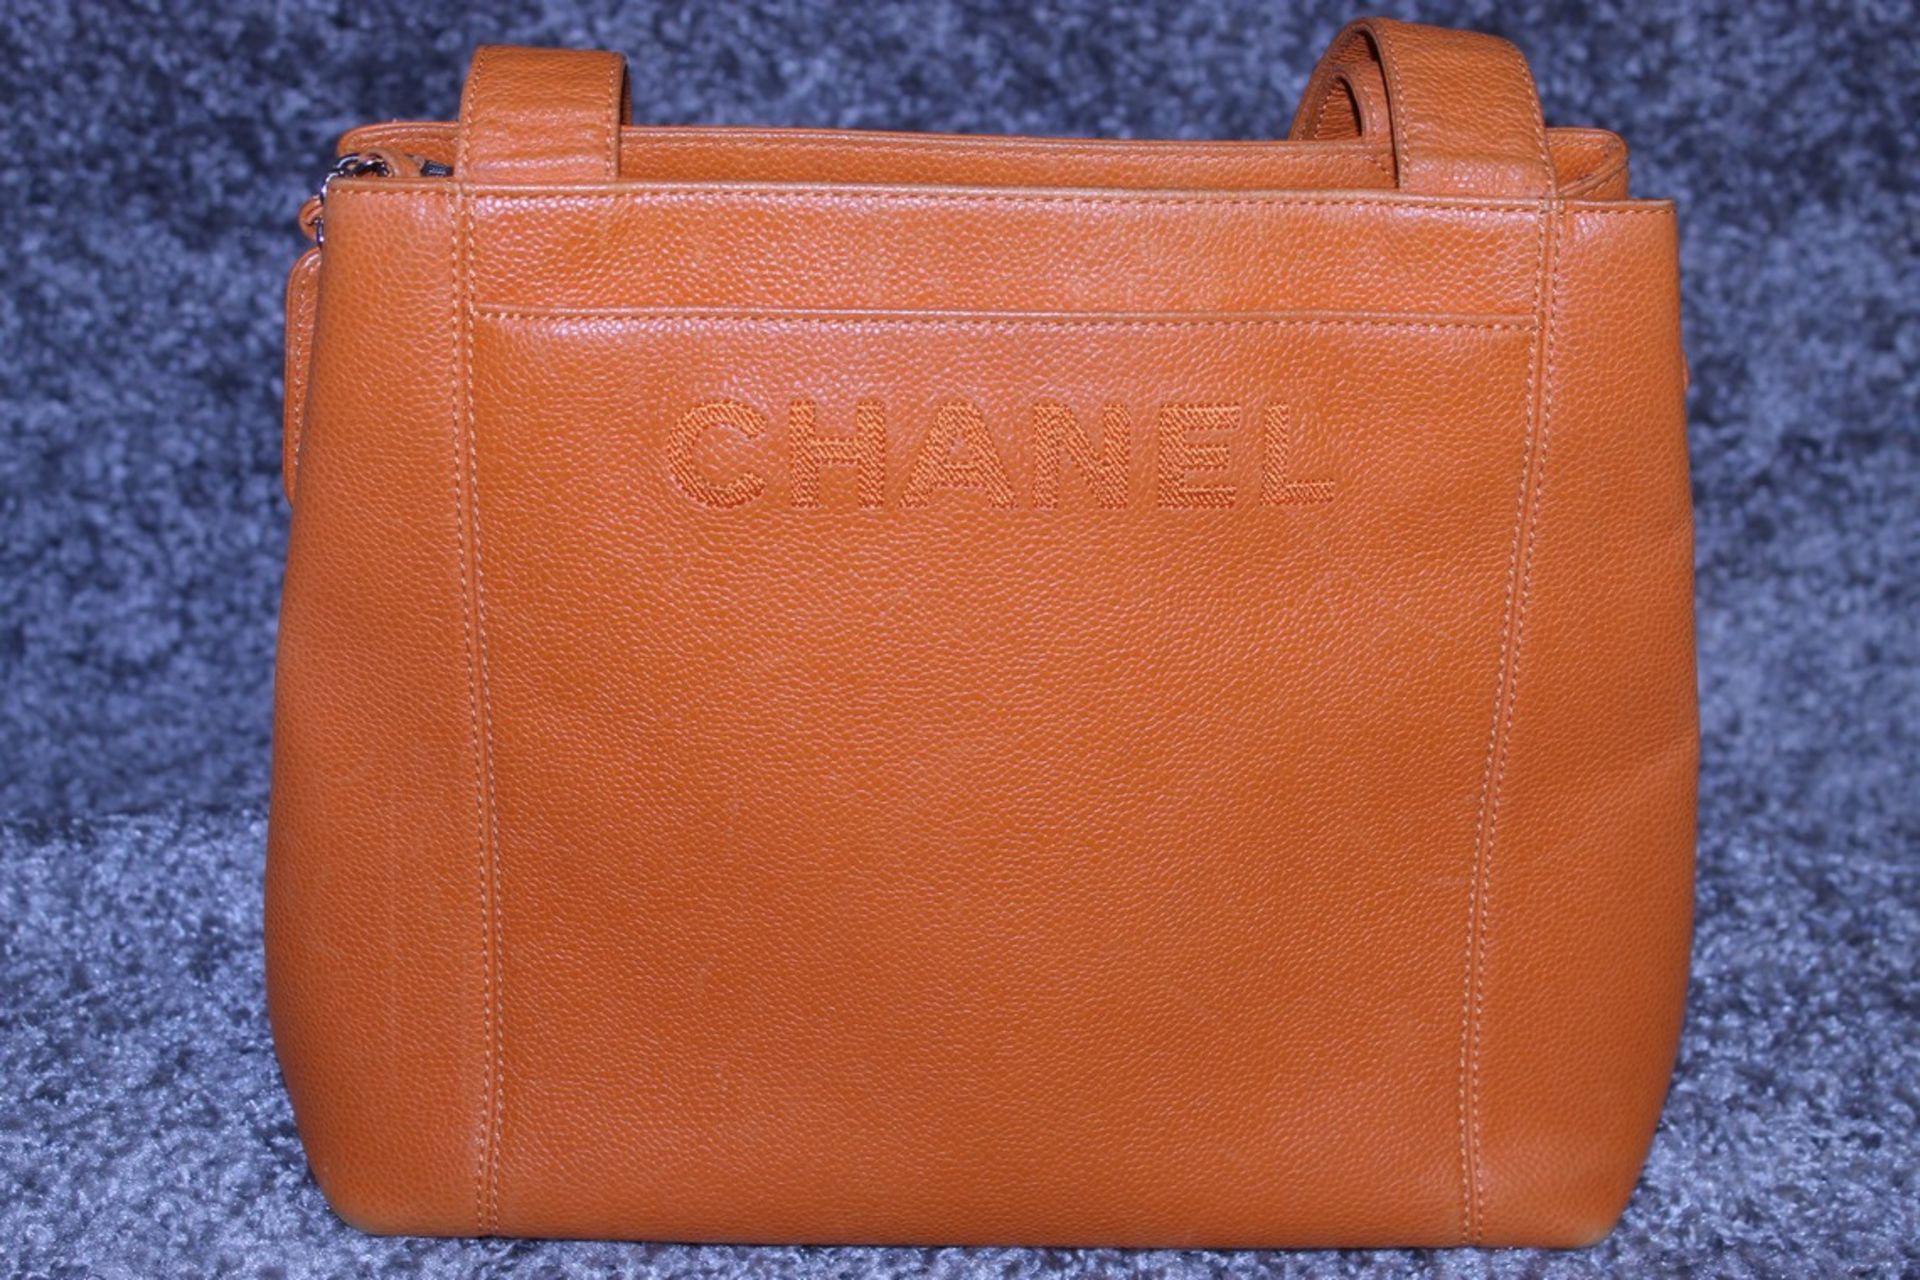 RRP £3,500 Chanel Orange Calf Leather Handbag, Caviar Leather, Orange Leather Straps, 29X25X12Cm (